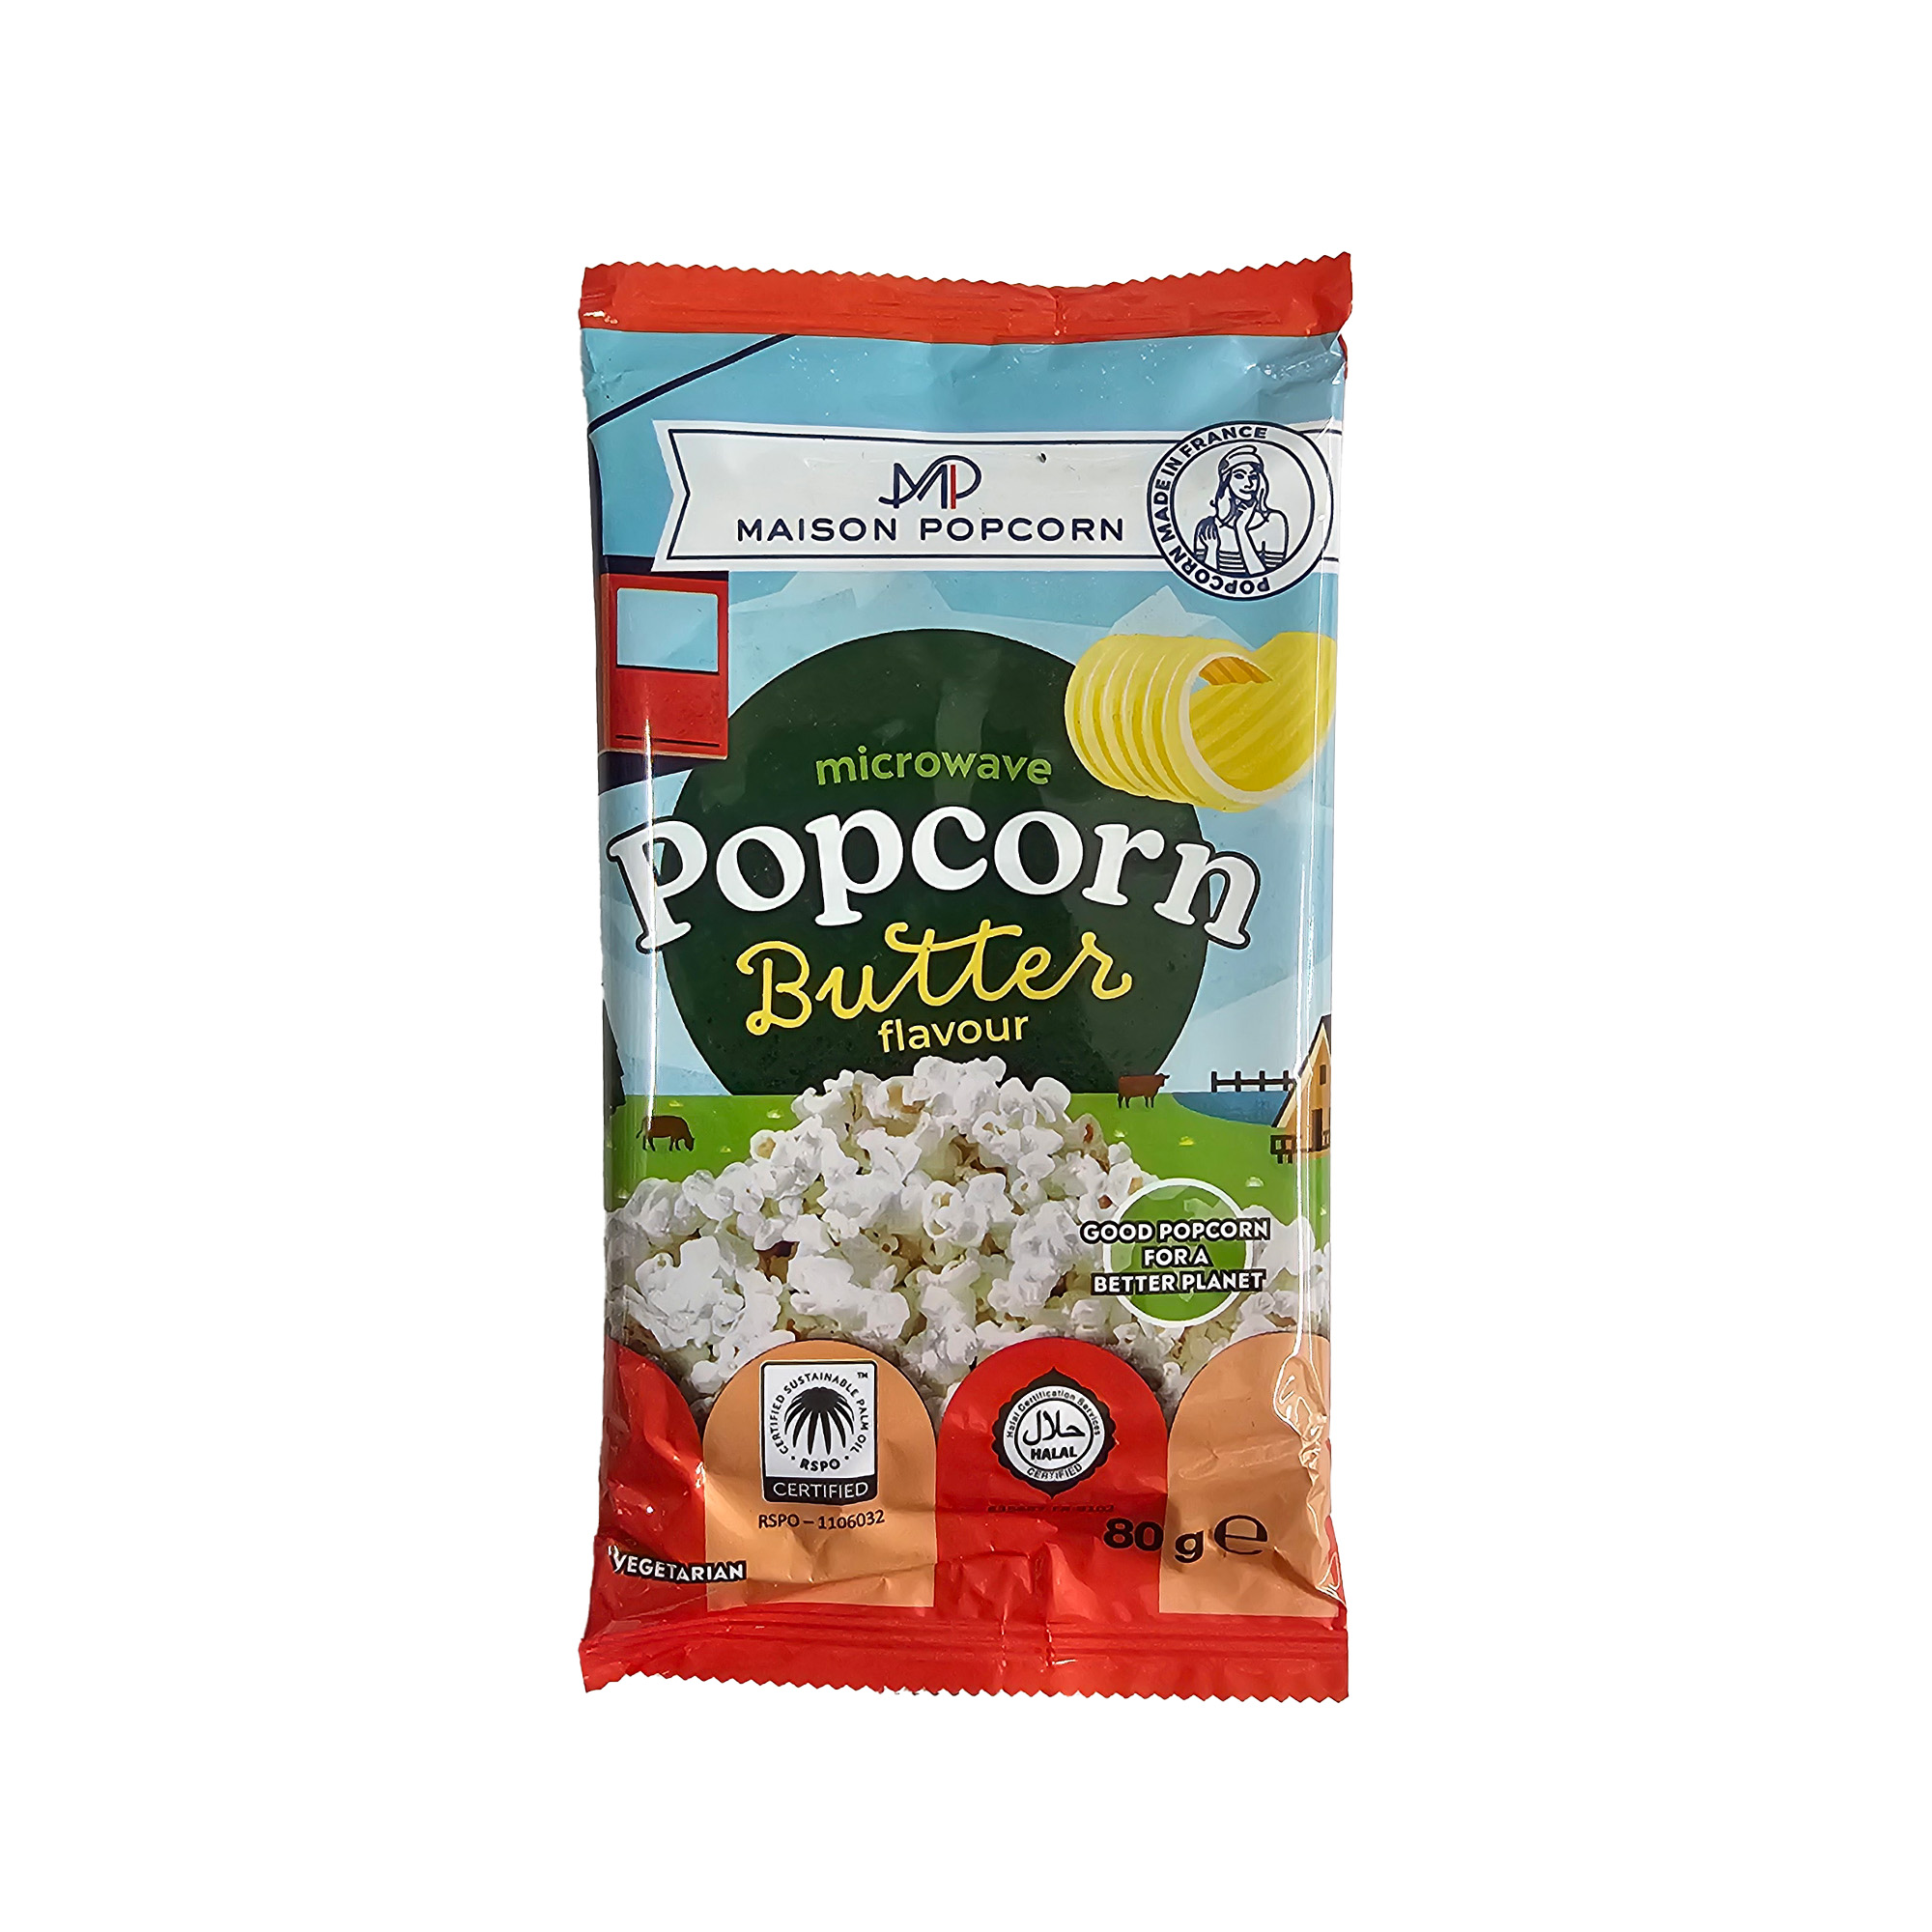 Microwave Popcorn Butter Flavour (Maison Popcorn)